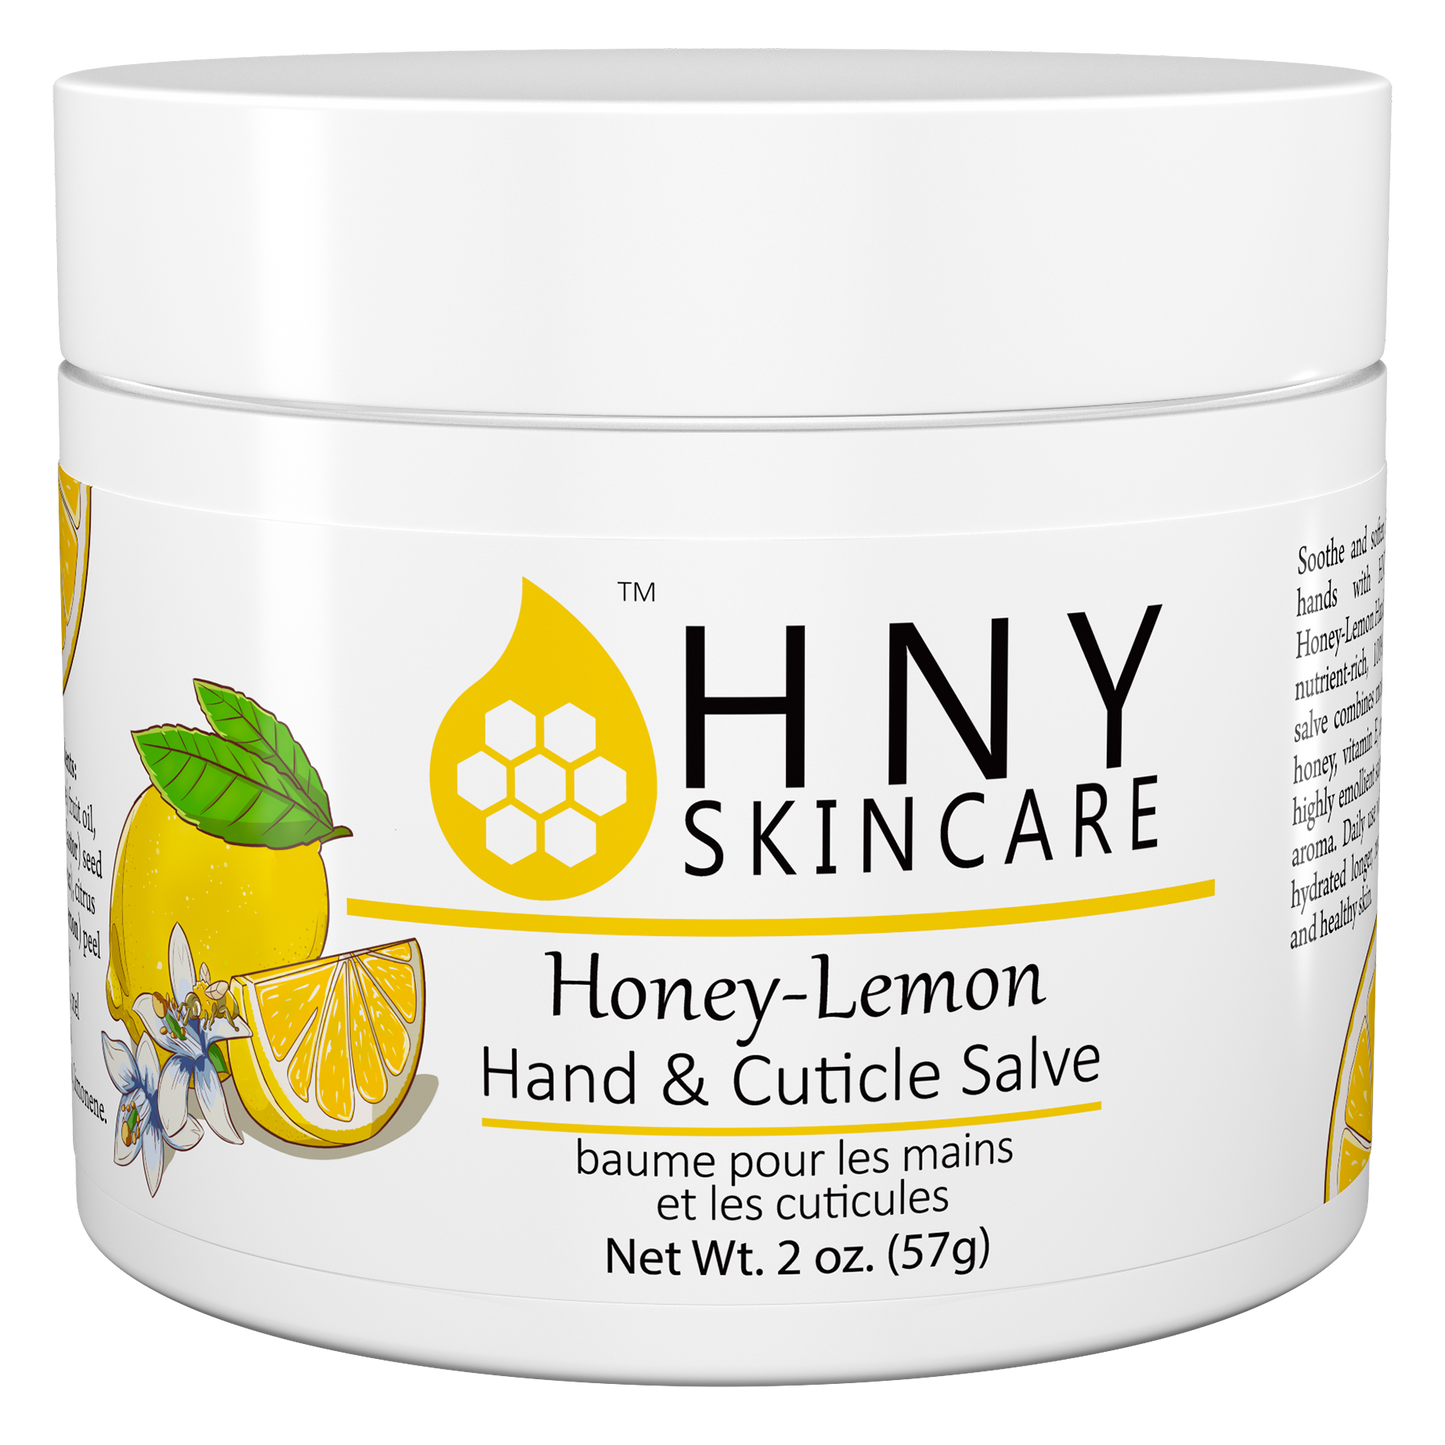 Honey-Lemon Hand & Cuticle Salve